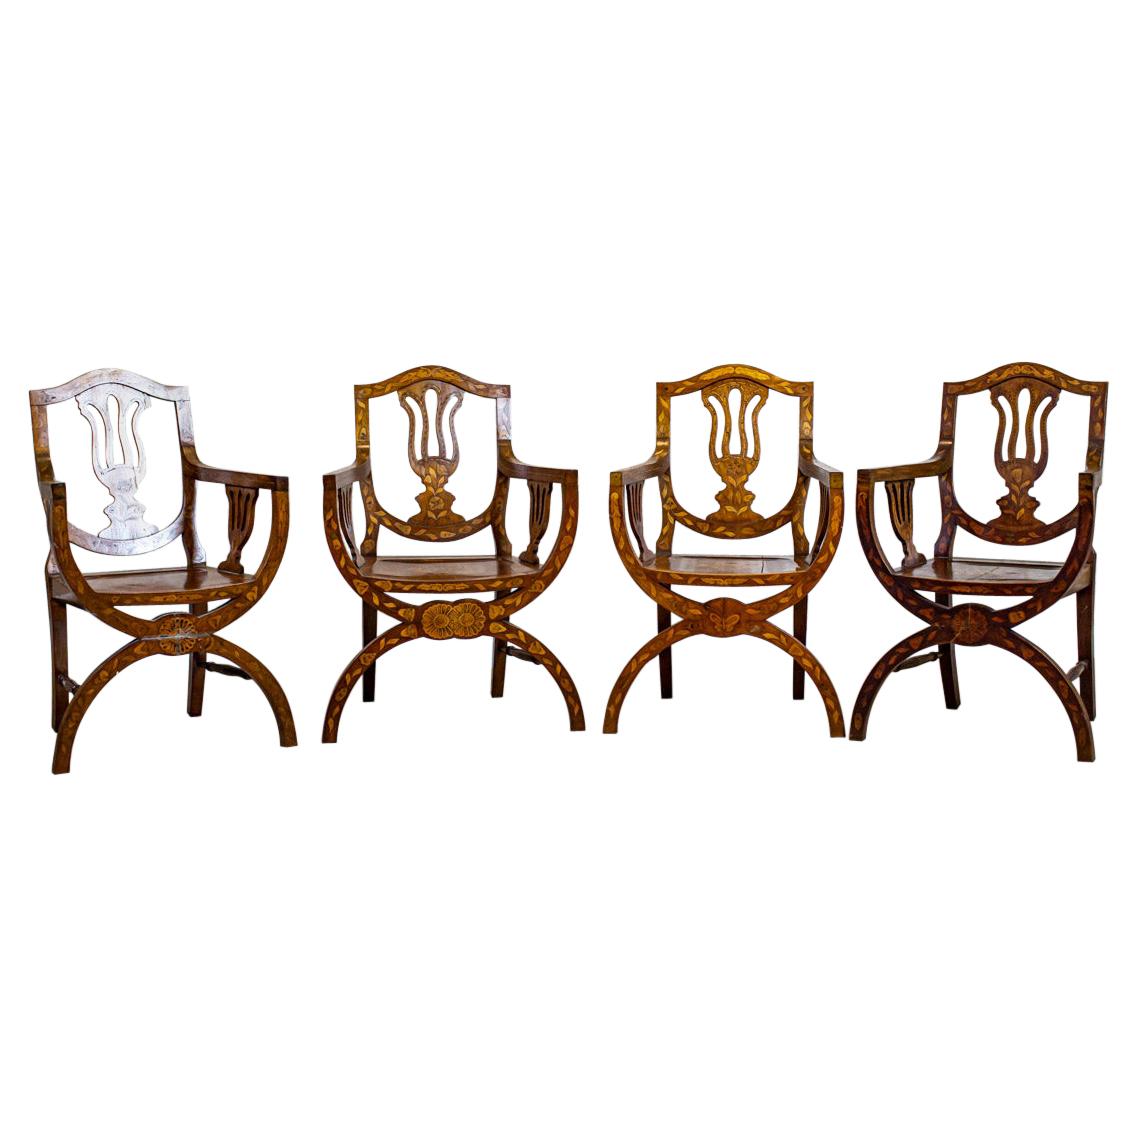 Set of 19th Century Inlaid Walnut Armchairs on X-Shaped Legs